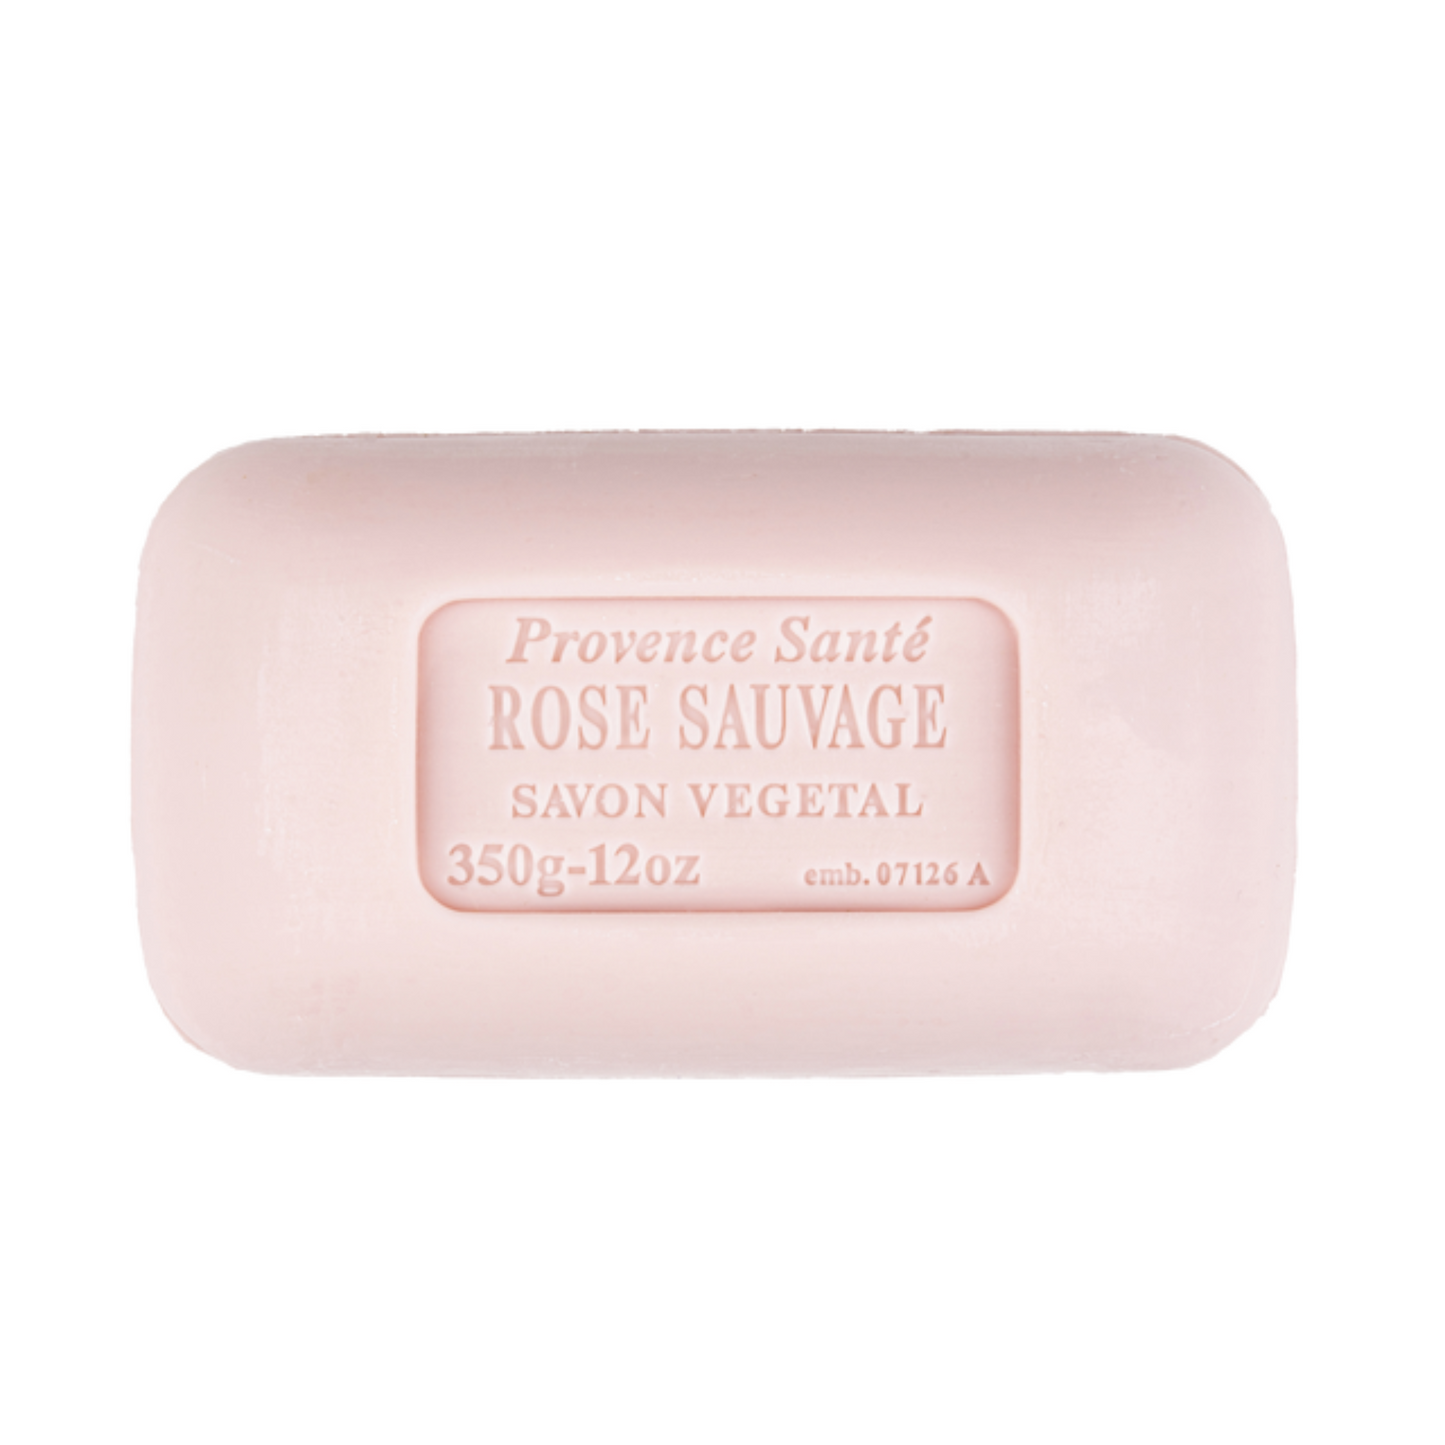 Primary Image of Provence Sante Wild Rose Big Bar Soap (12 oz)